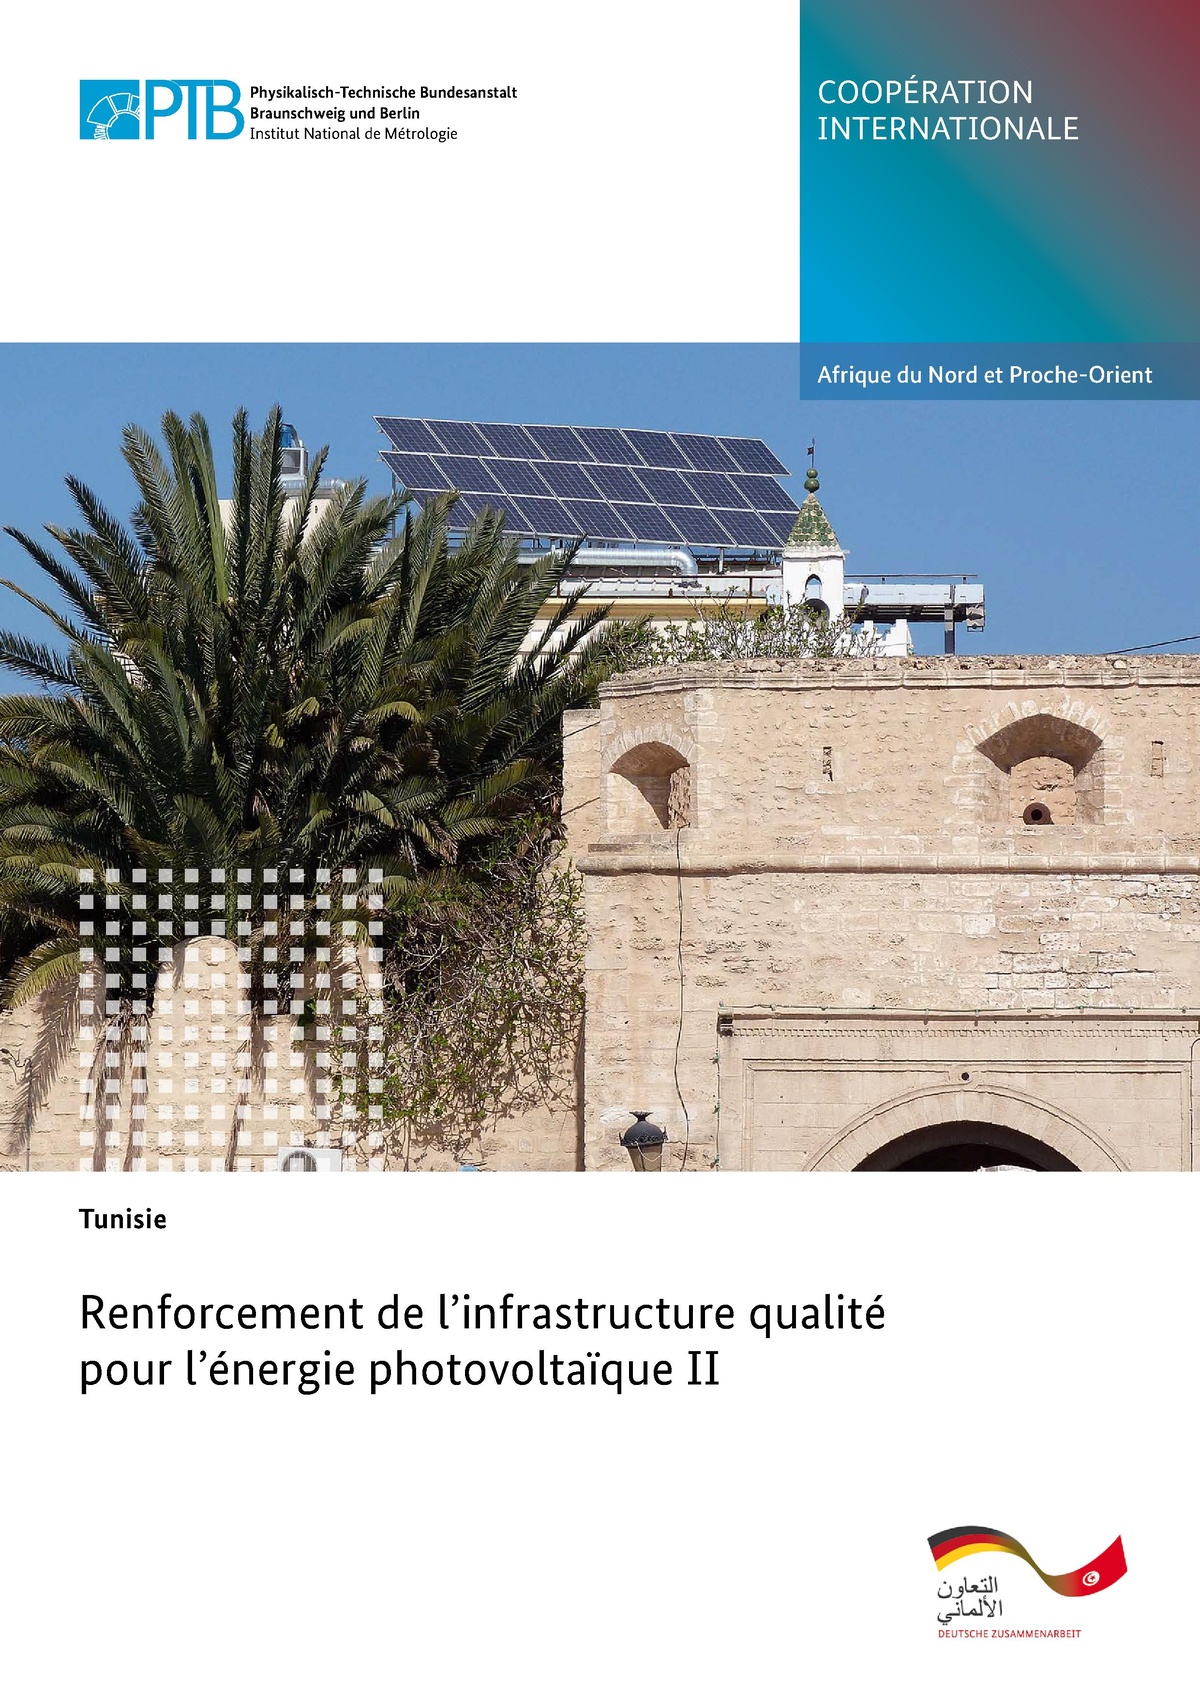 File:PTB project Tunesia PV 2 95349 FR.pdf - energypedia